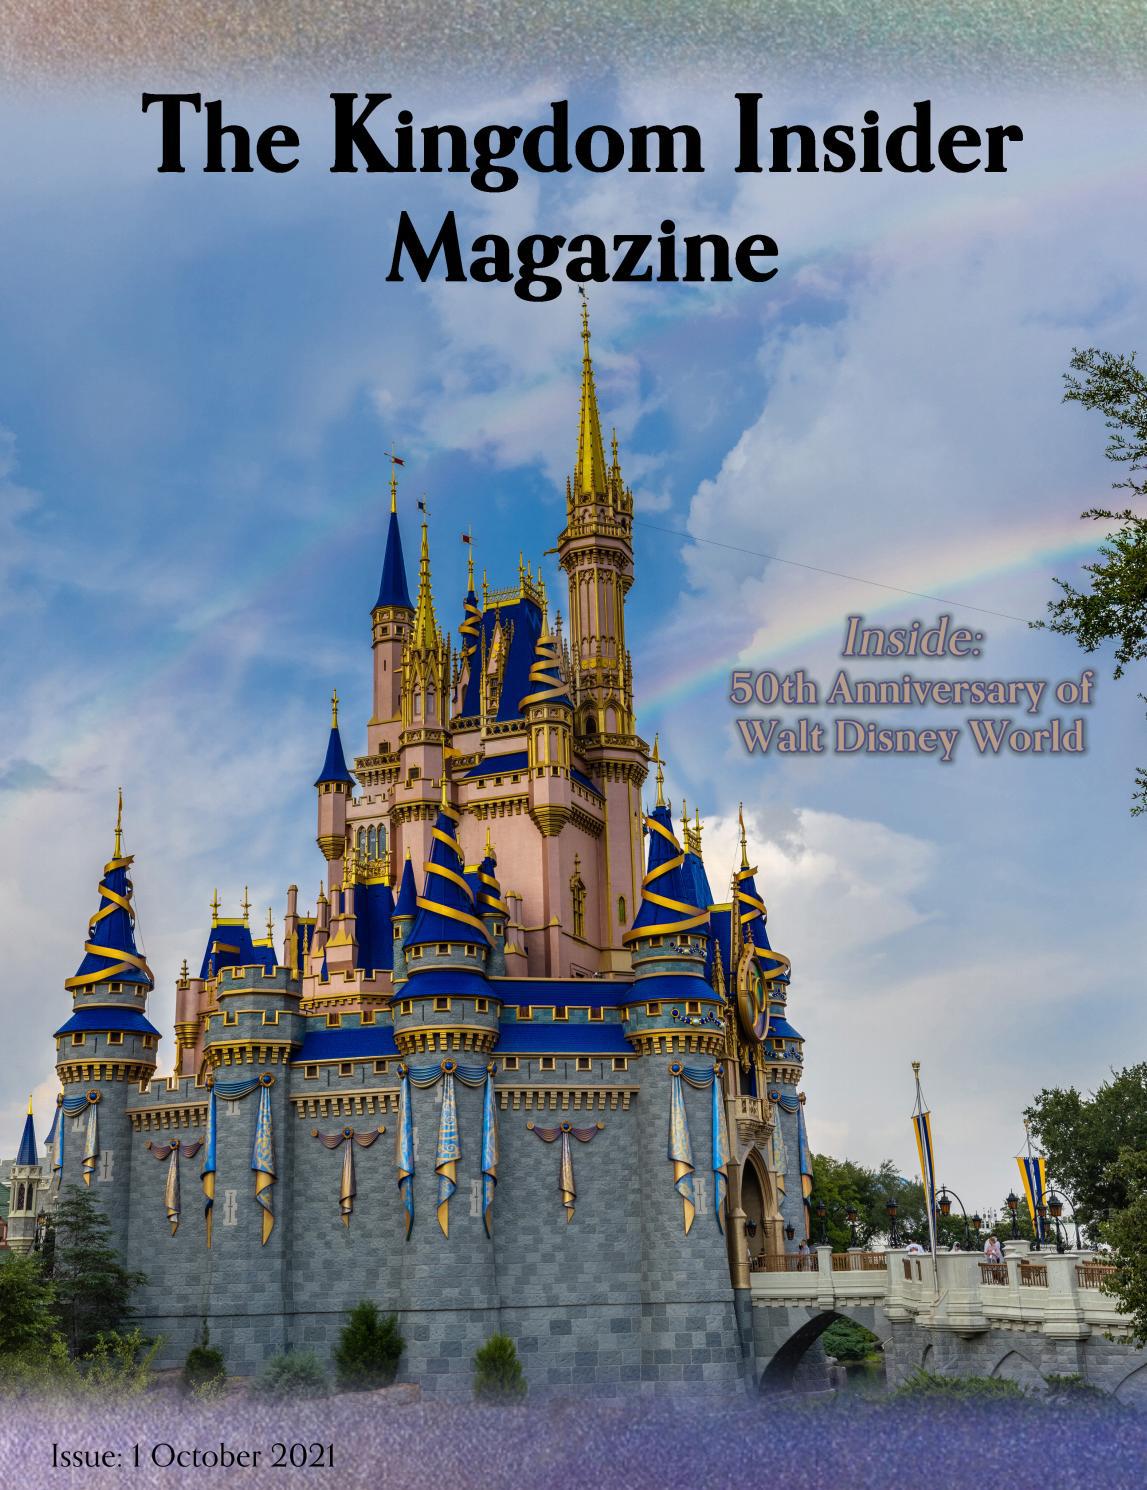 The Kingdom Insider Magazine